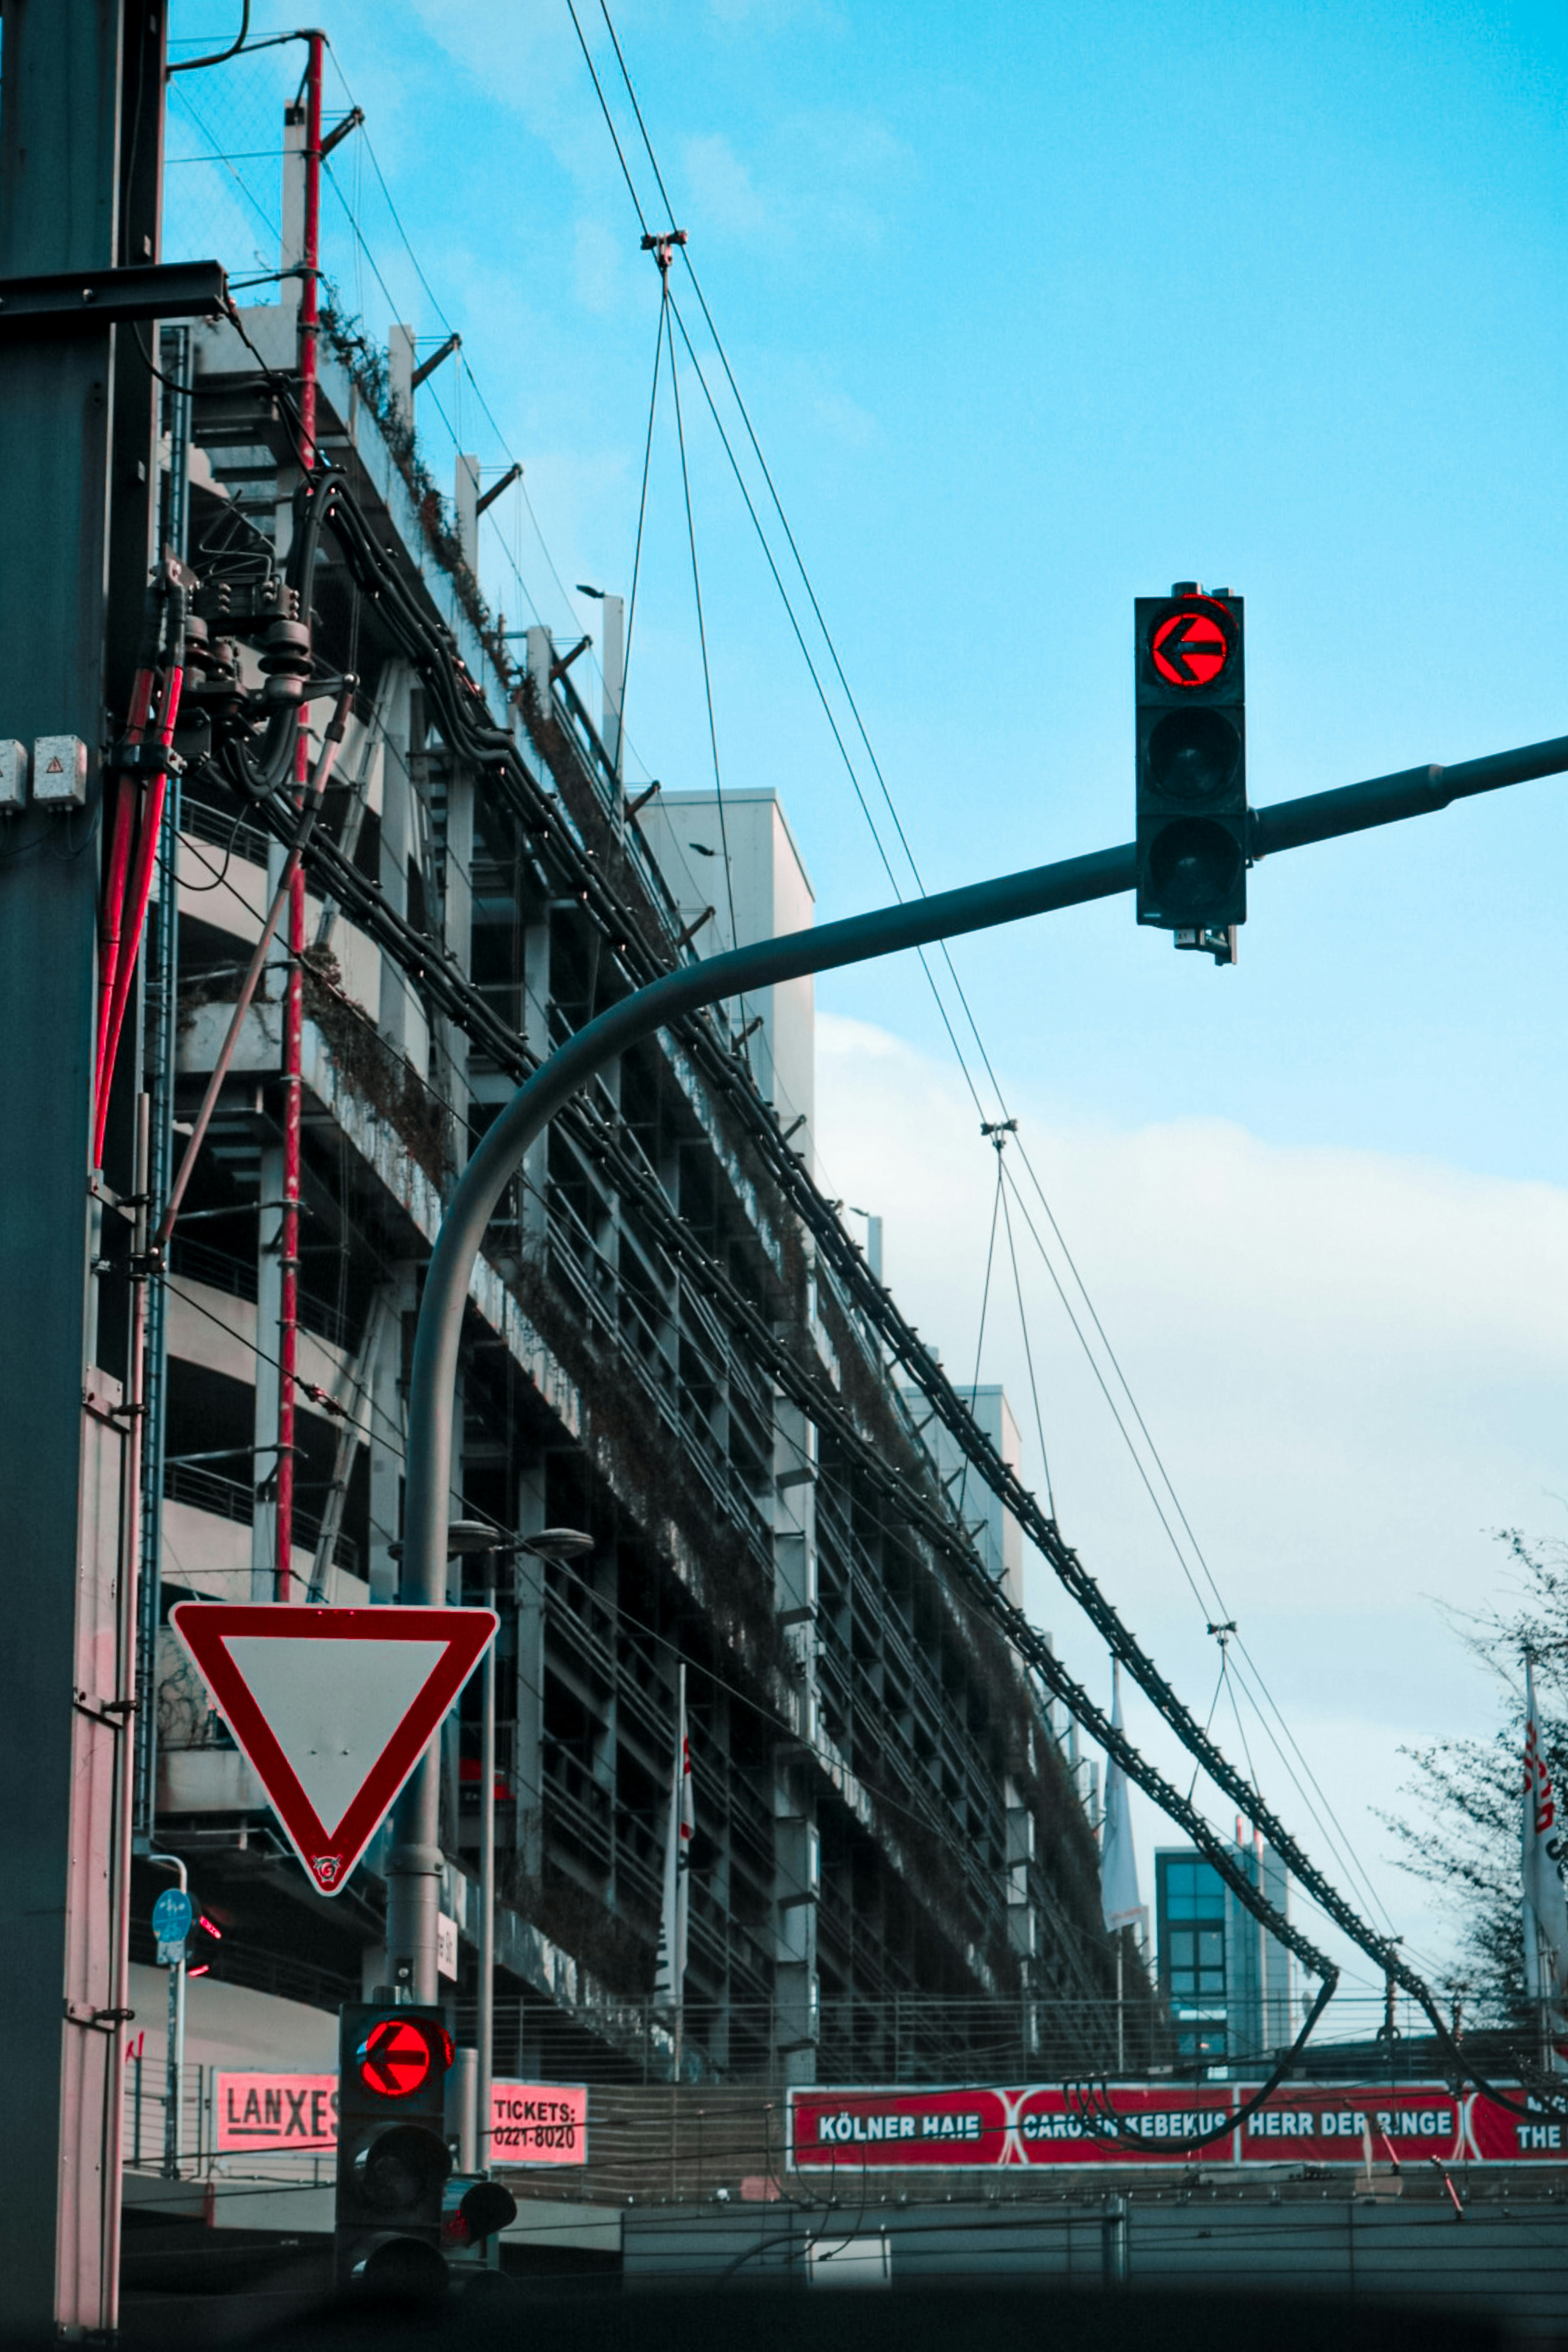 black traffic light indicating stop